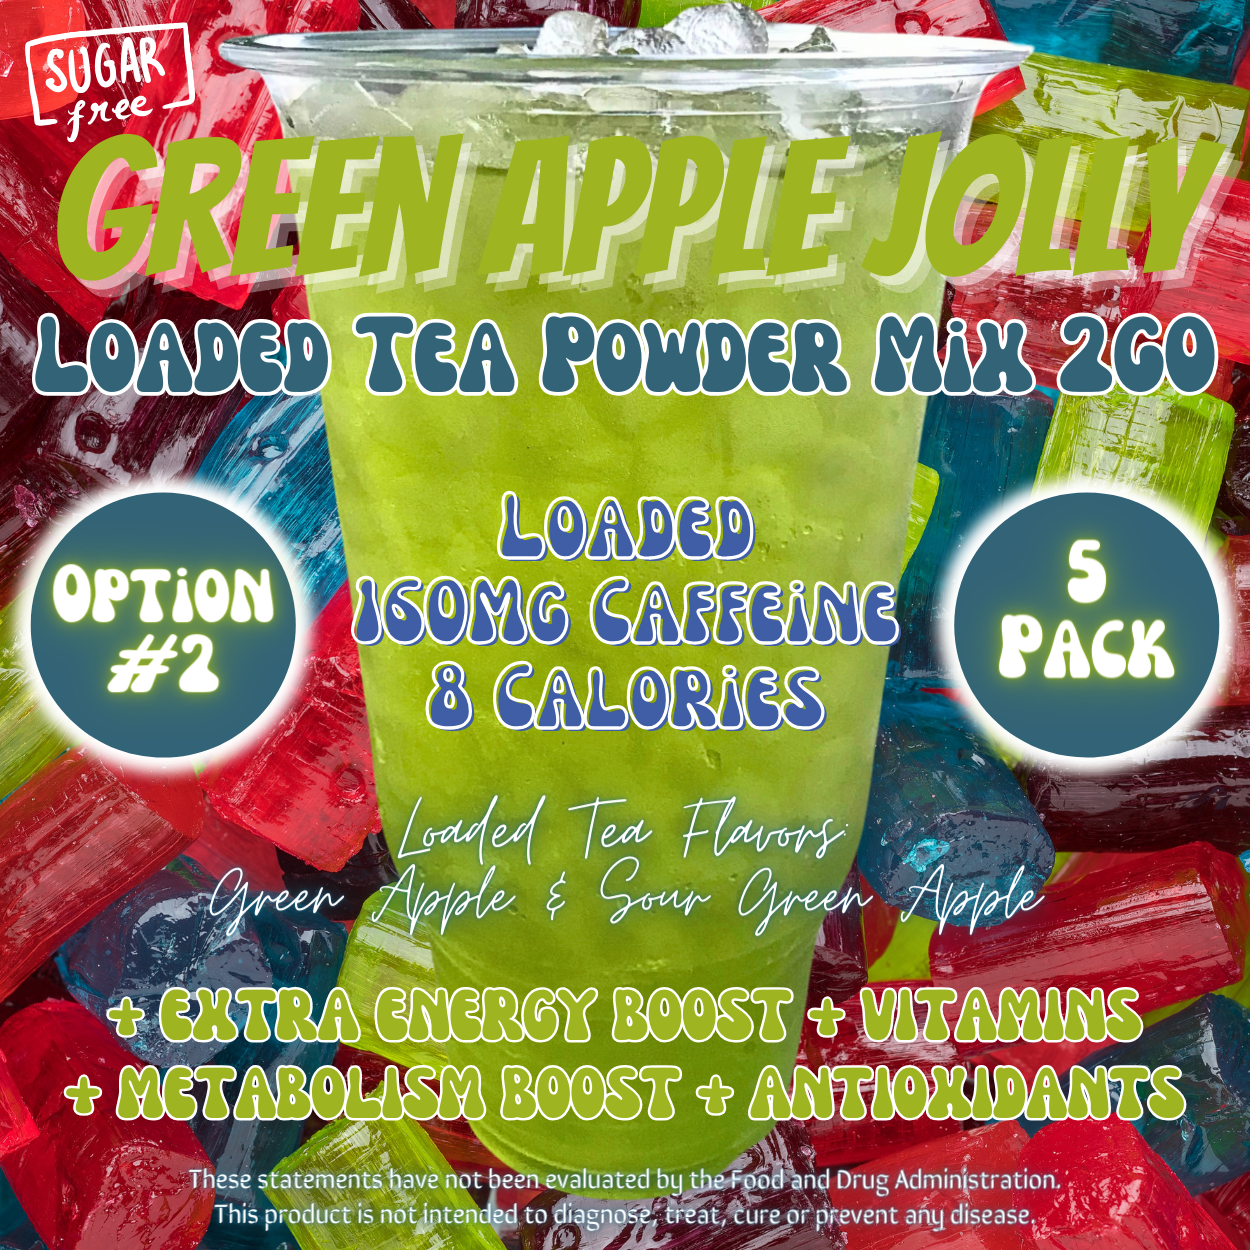 Green Apple Jolly: Loaded Tea Powder Mix 2GO Packets